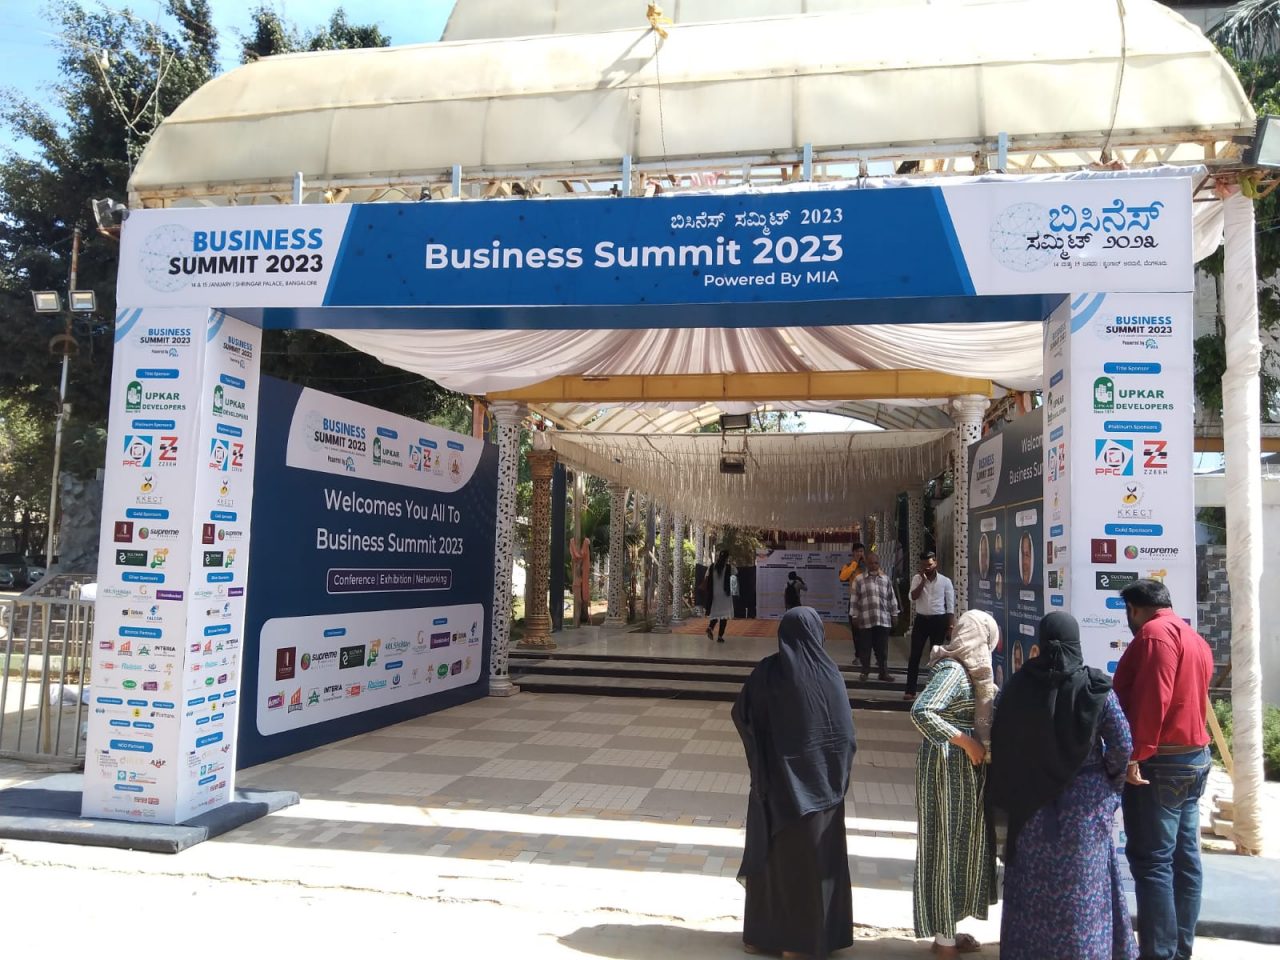 business-summit-2023-1280x960.jpg